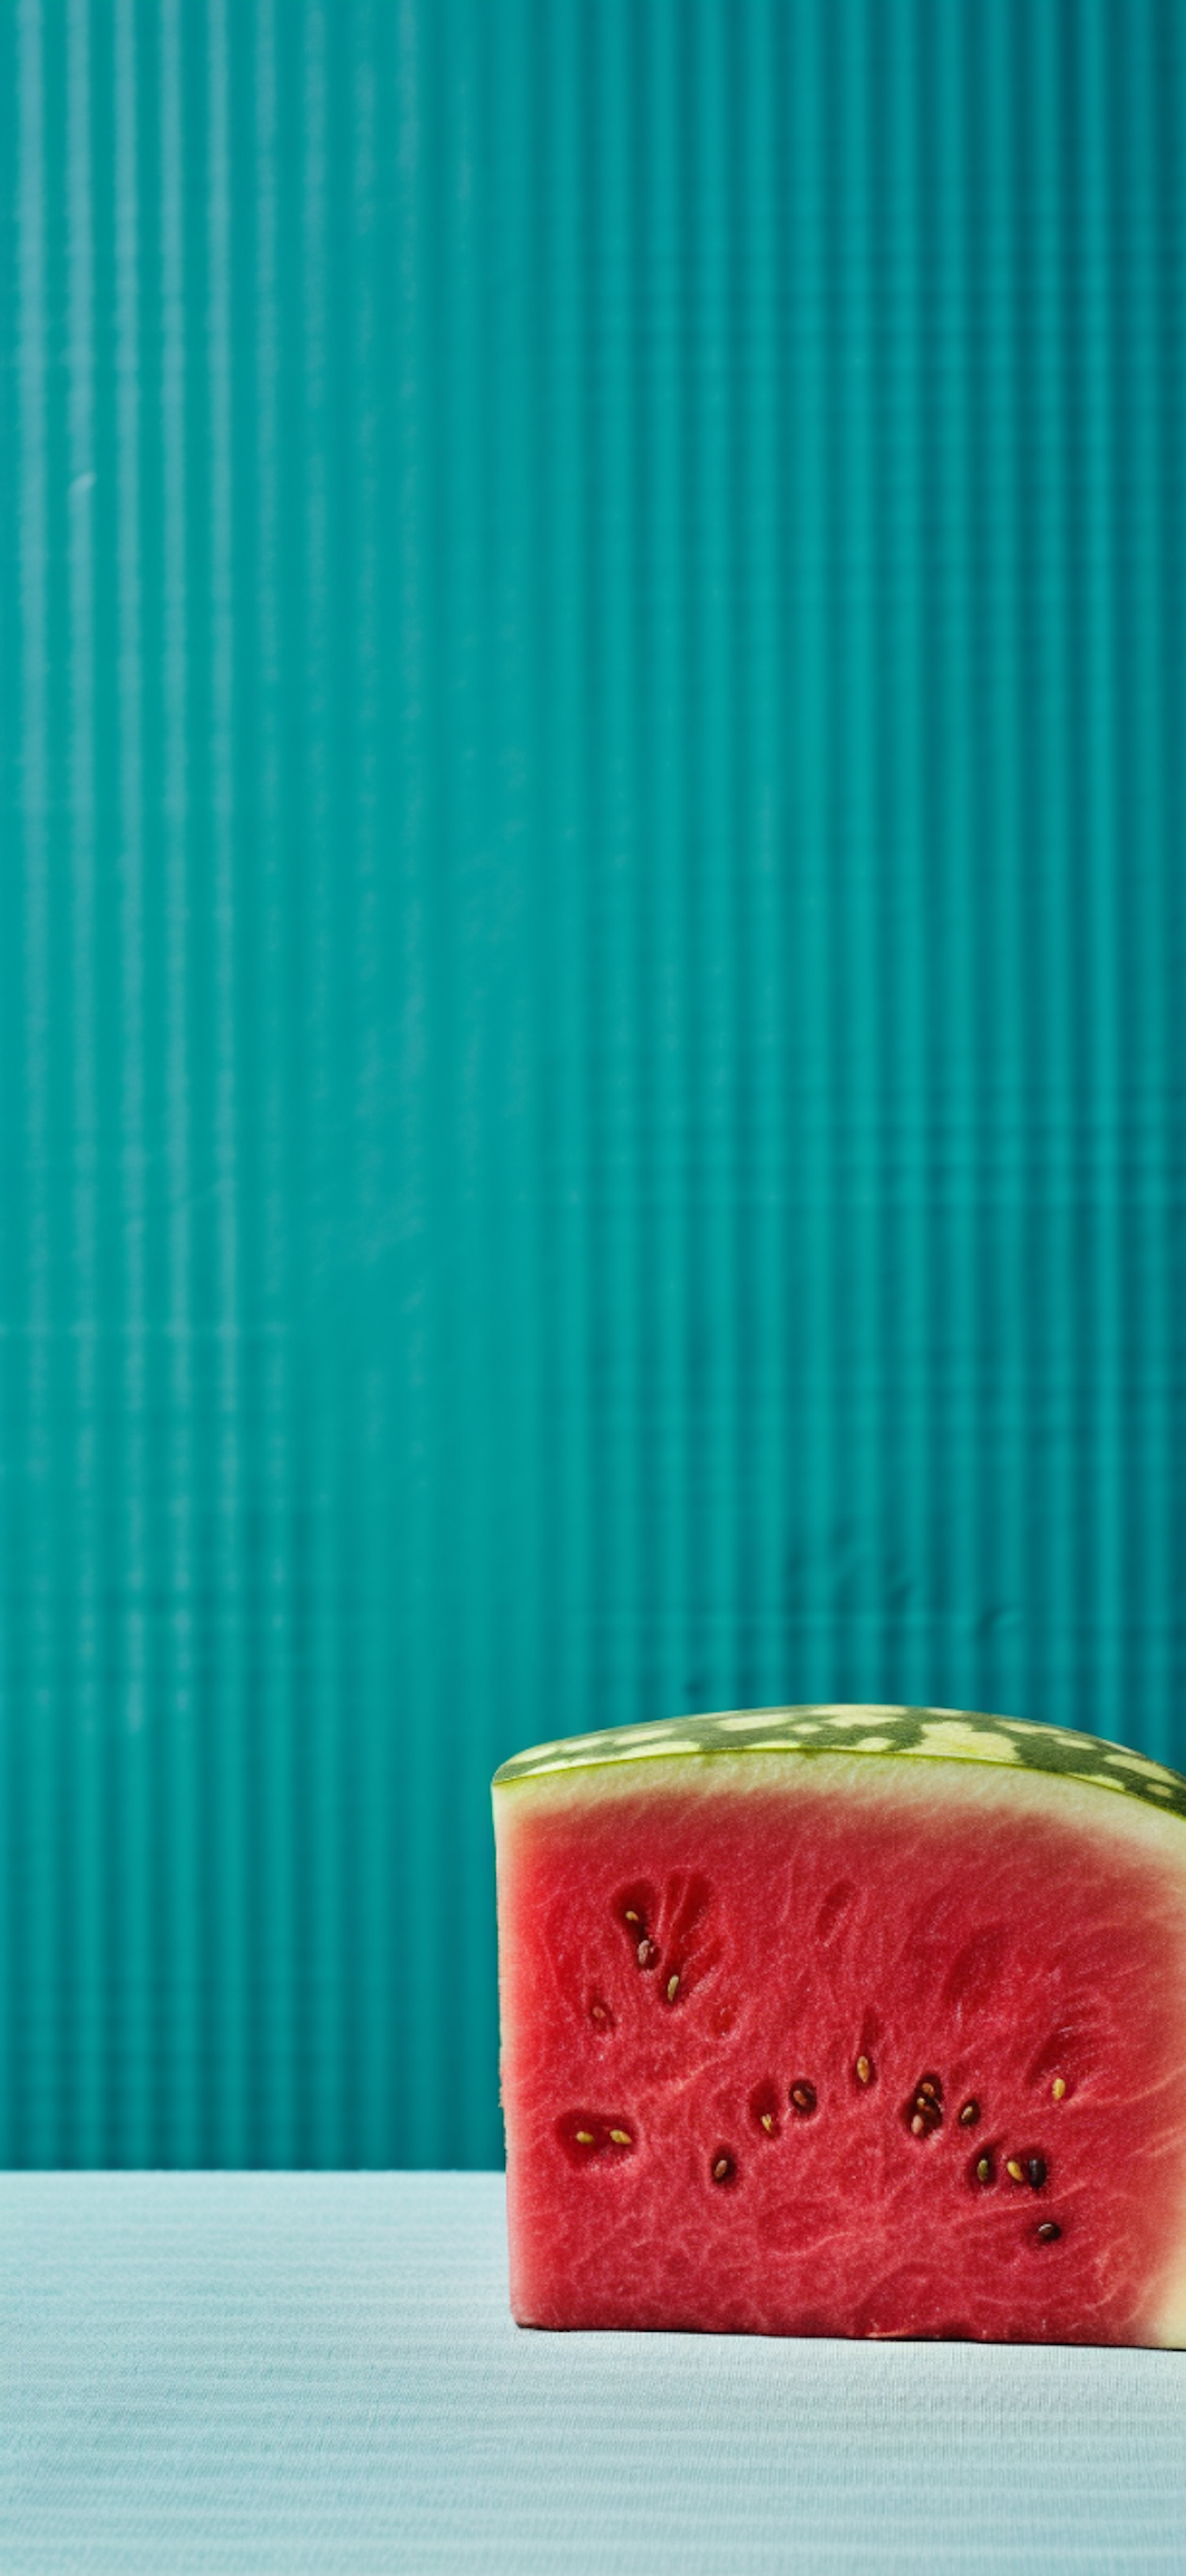 Vibrant Watermelon Slice on Textured Teal